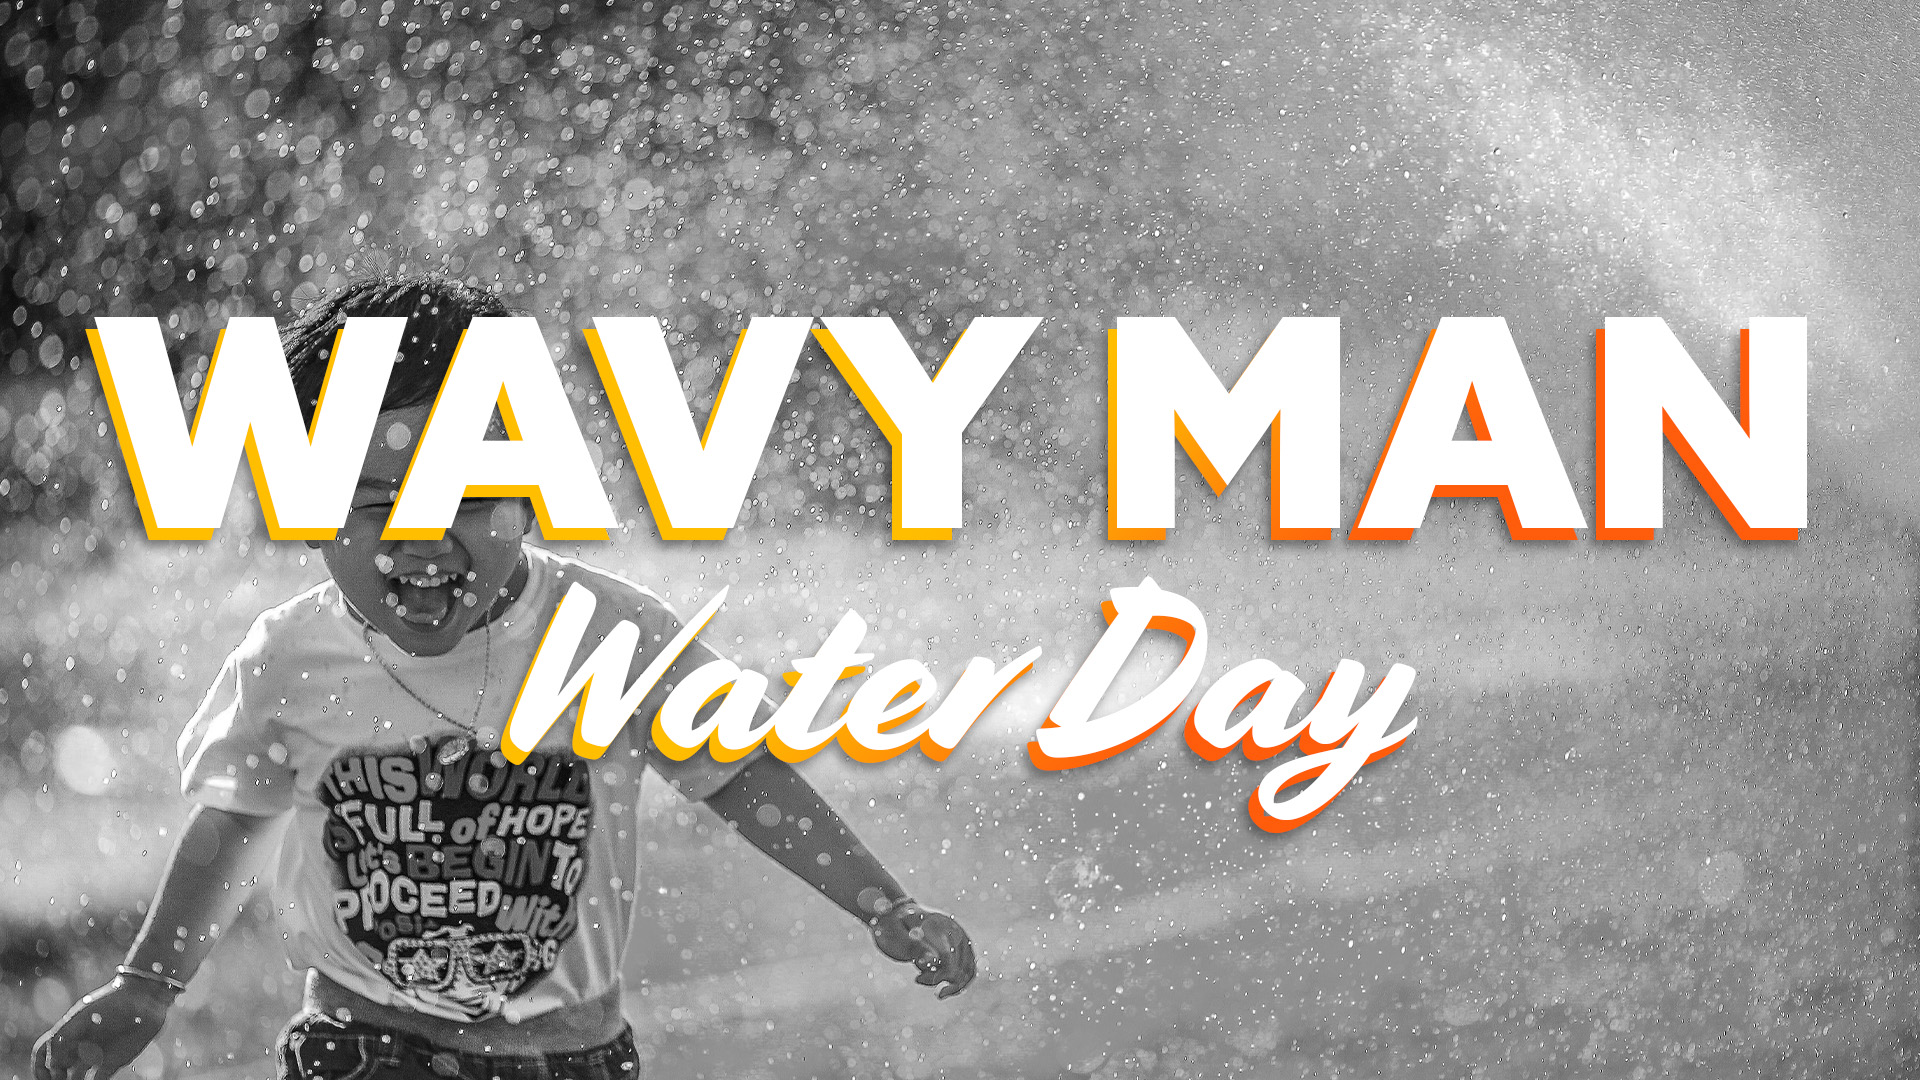 Image: Wavy Man (Water Play Day)